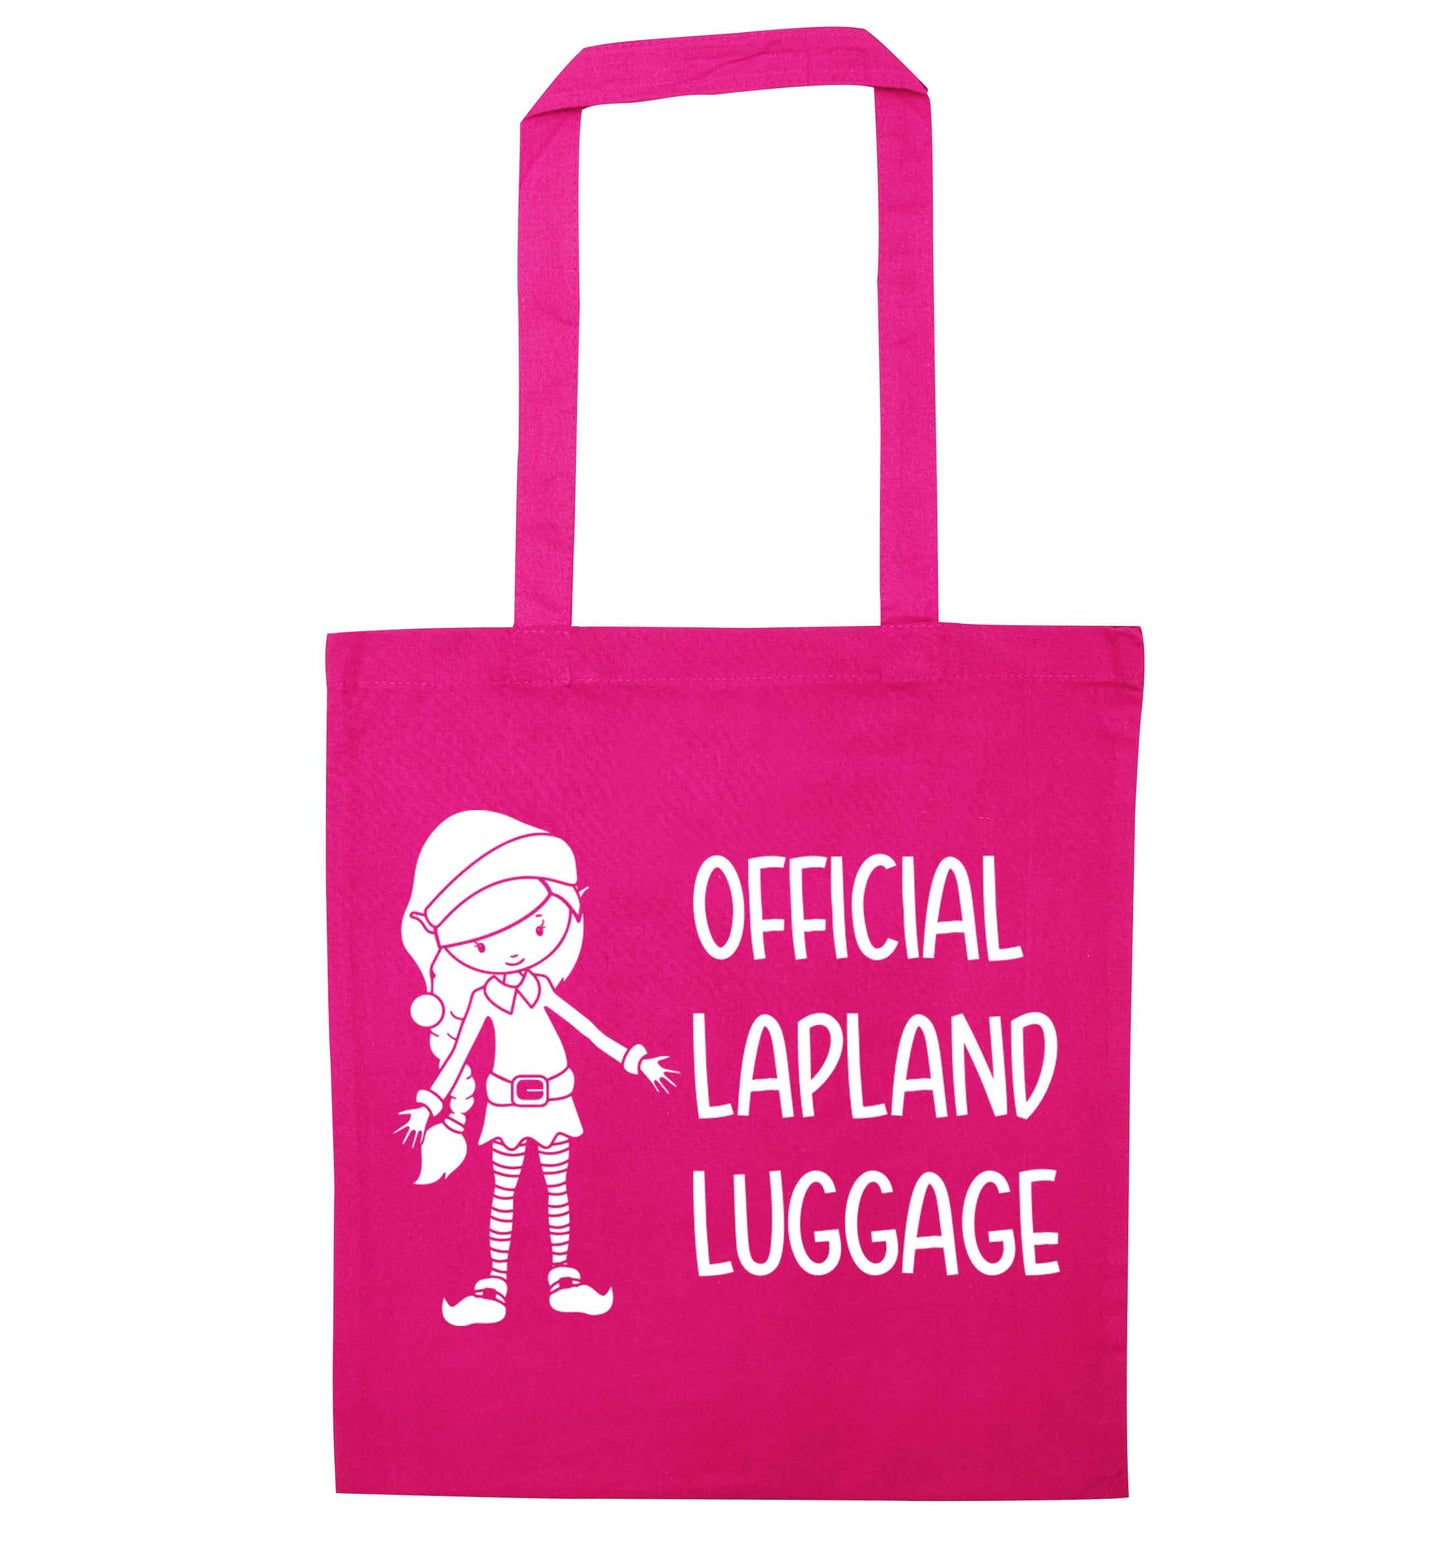 Official lapland luggage - Elf snowflake pink tote bag